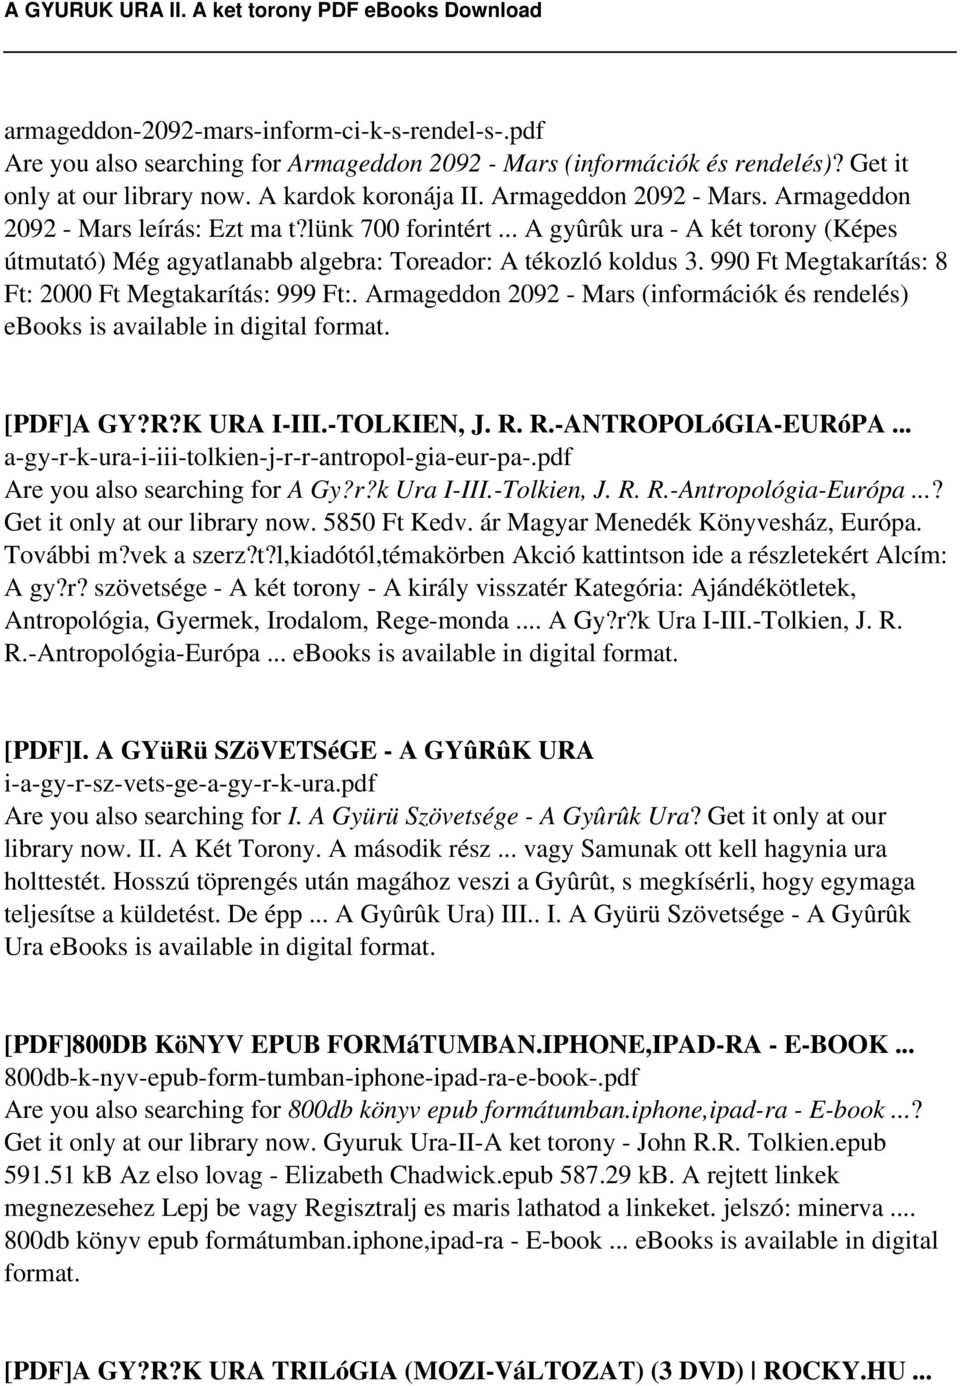 990 Ft Megtakarítás: 8 Ft: 2000 Ft Megtakarítás: 999 Ft:. Armageddon 2092 - Mars (információk és rendelés) ebooks is available in digital format. [PDF]A GY?R?K URA I-III.-TOLKIEN, J. R.